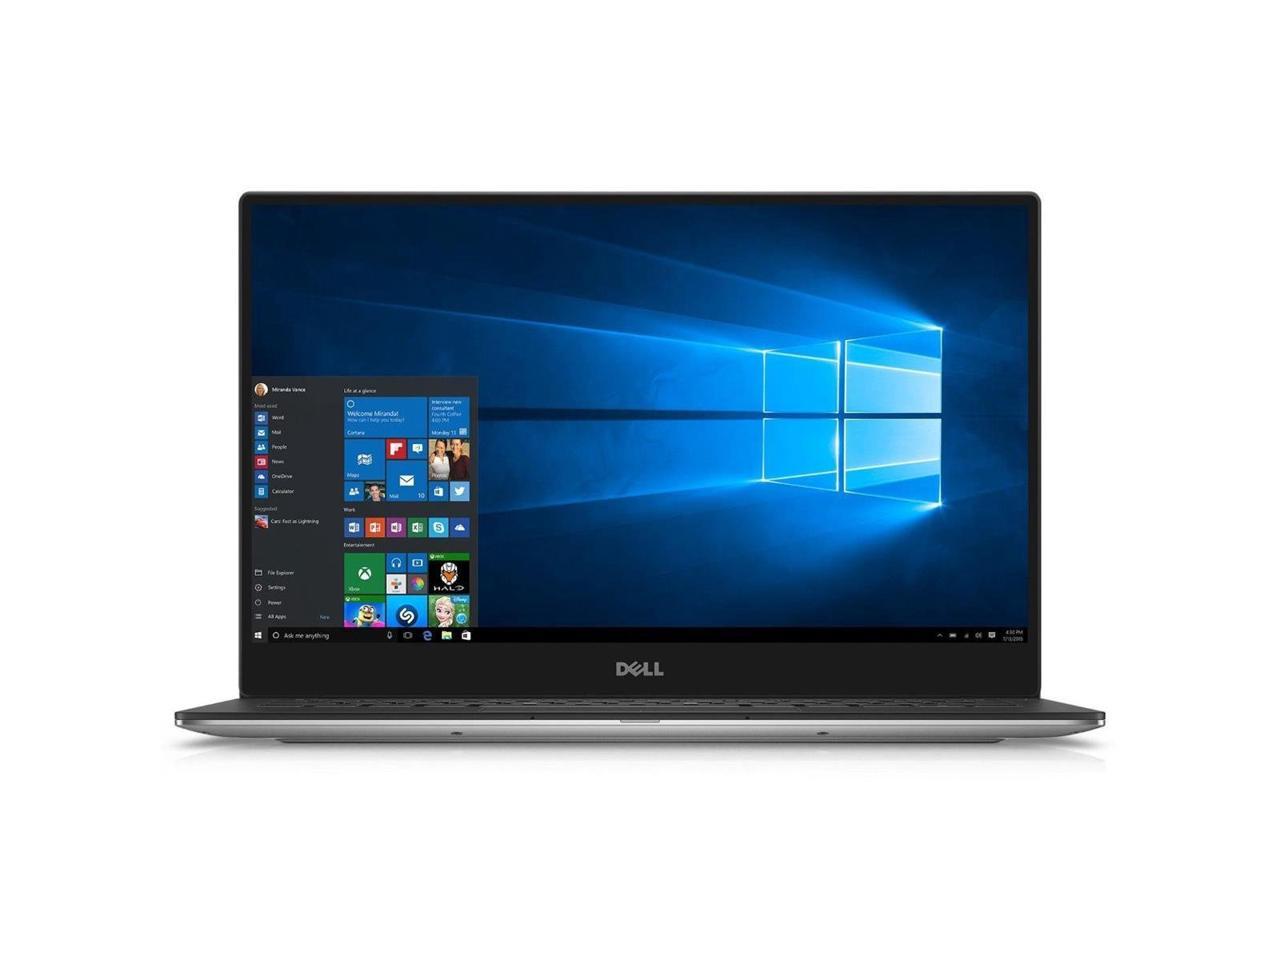 Dell XPS 13 13.3" IPS 3200x1800 Quad HD+ Touchscreen Notebook Computer (2017 Newest), Intel Core i5-6200U 2.3GHz, 8GB RAM, 256GB SSD, 802.11ac dual band, Bluetooth, 720p Webcam, Windows 10 Home 64-bit